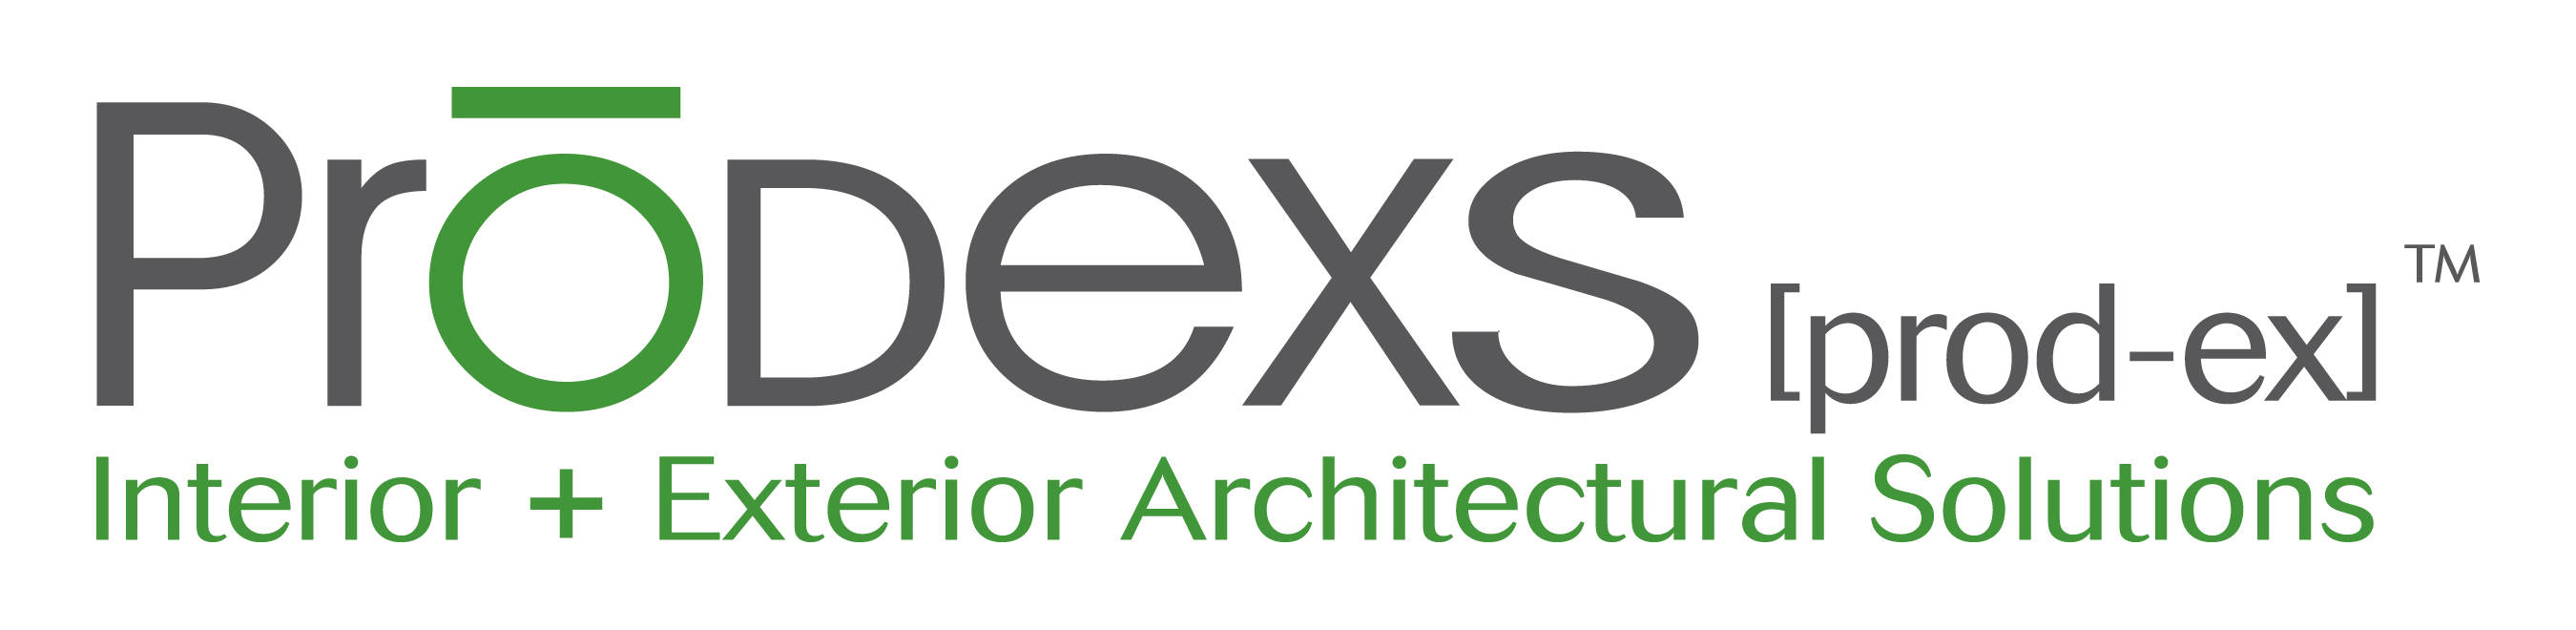 Prodexs logo